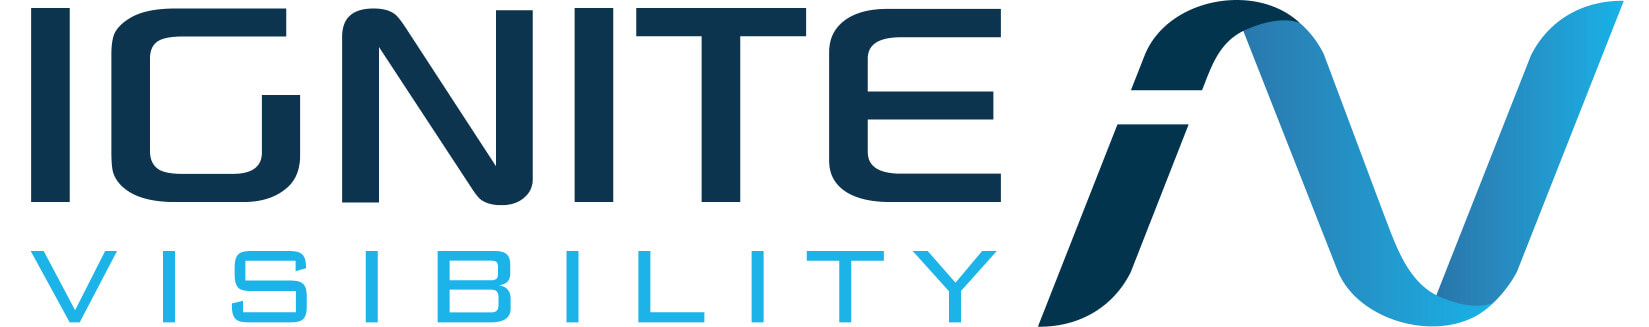 Best Medical SEO Firm Logo: Ignite Visibility